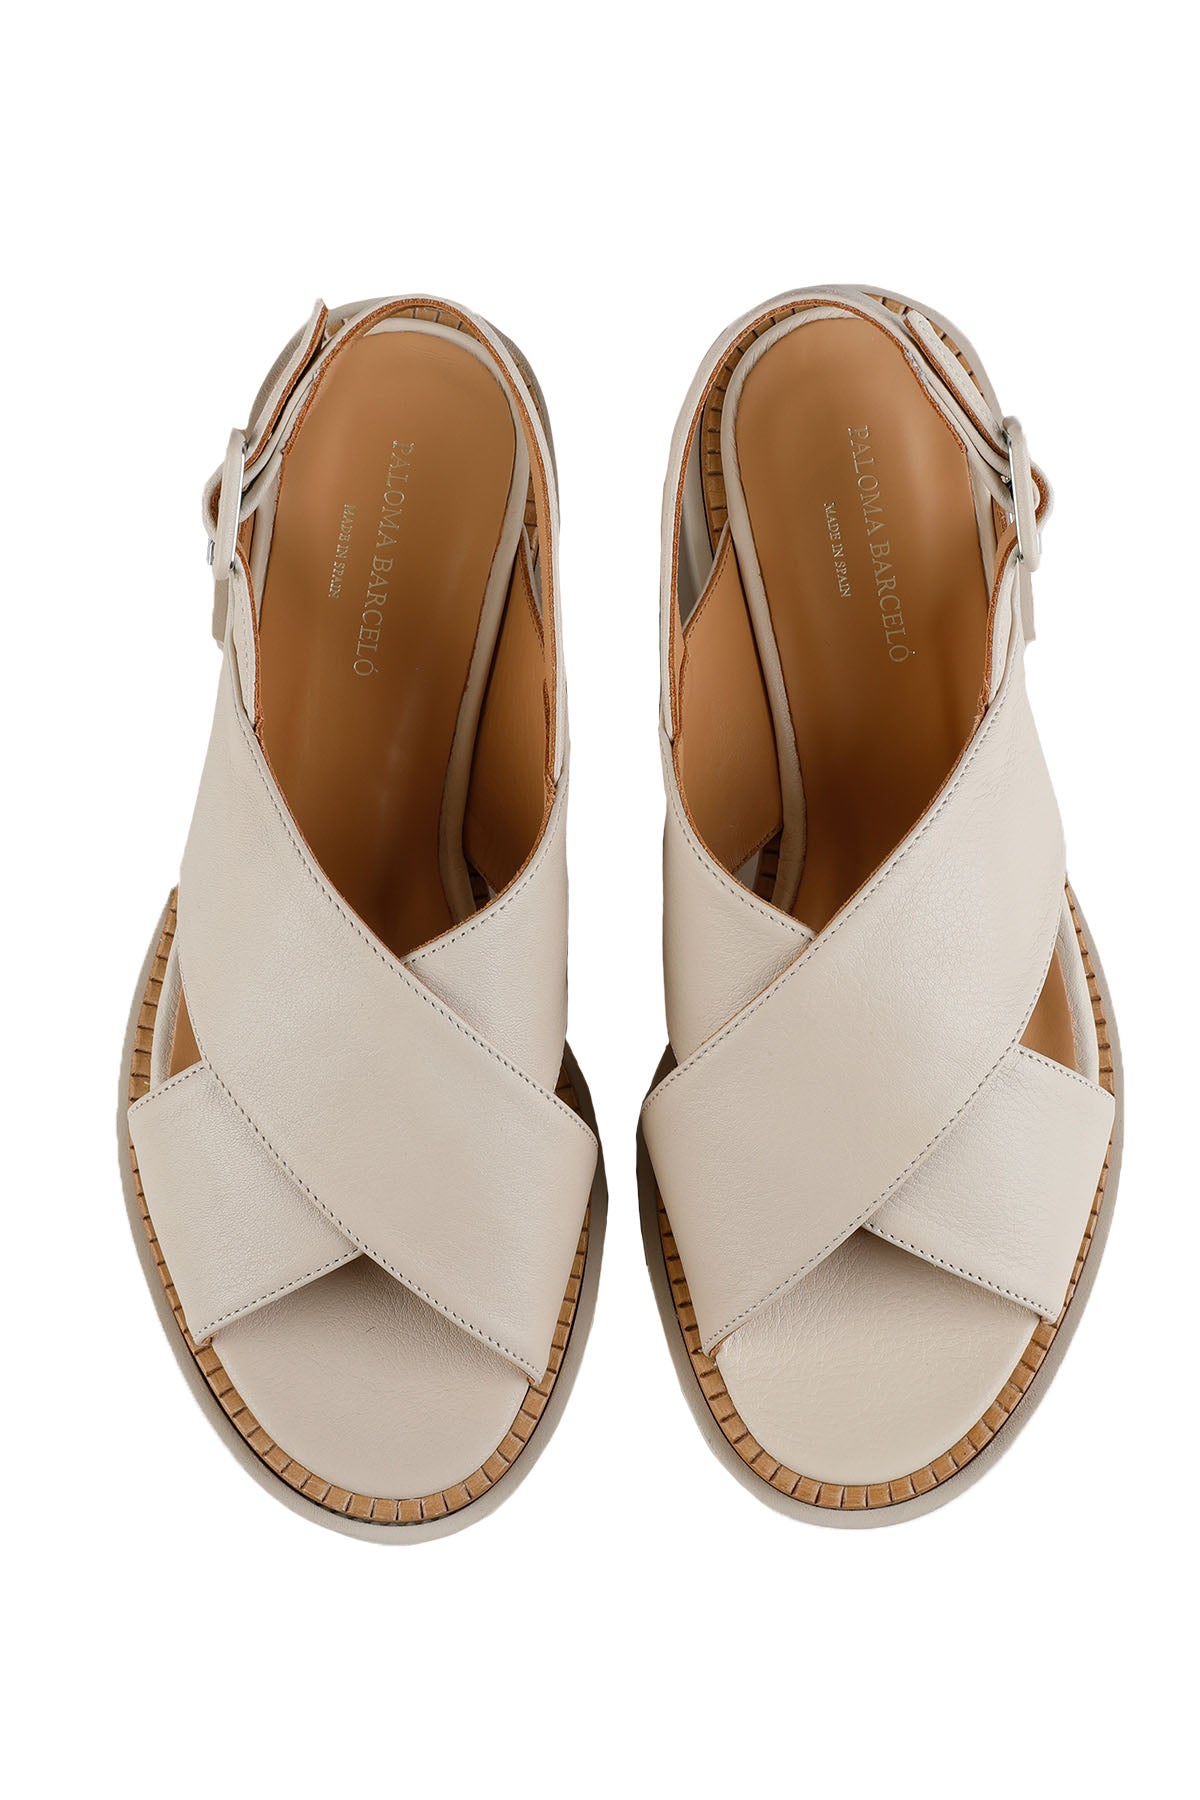 Paloma Barcelo Çapraz Bantlı Ayrık Platform Sandalet-Libas Trendy Fashion Store